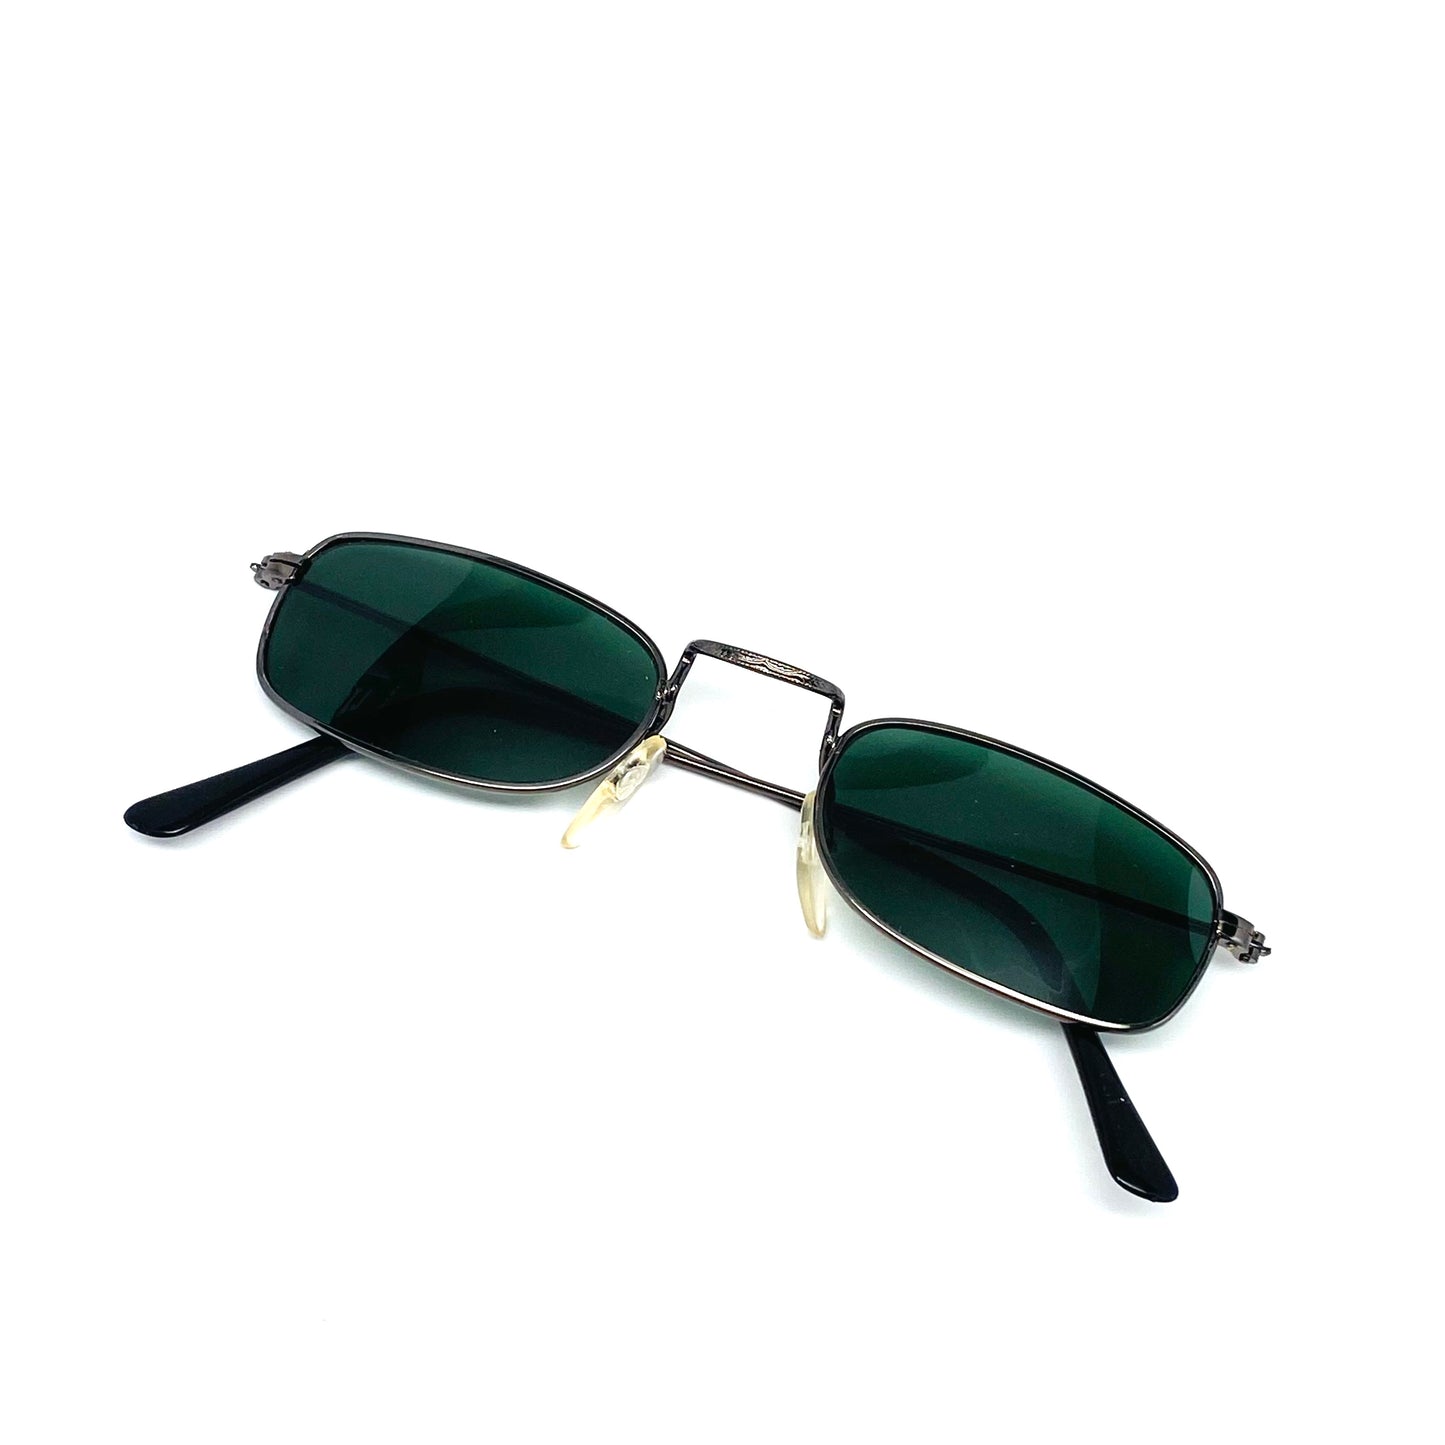 Vintage Small Size 1997 Rectangular Narrow Frame Sunglasses - Grey